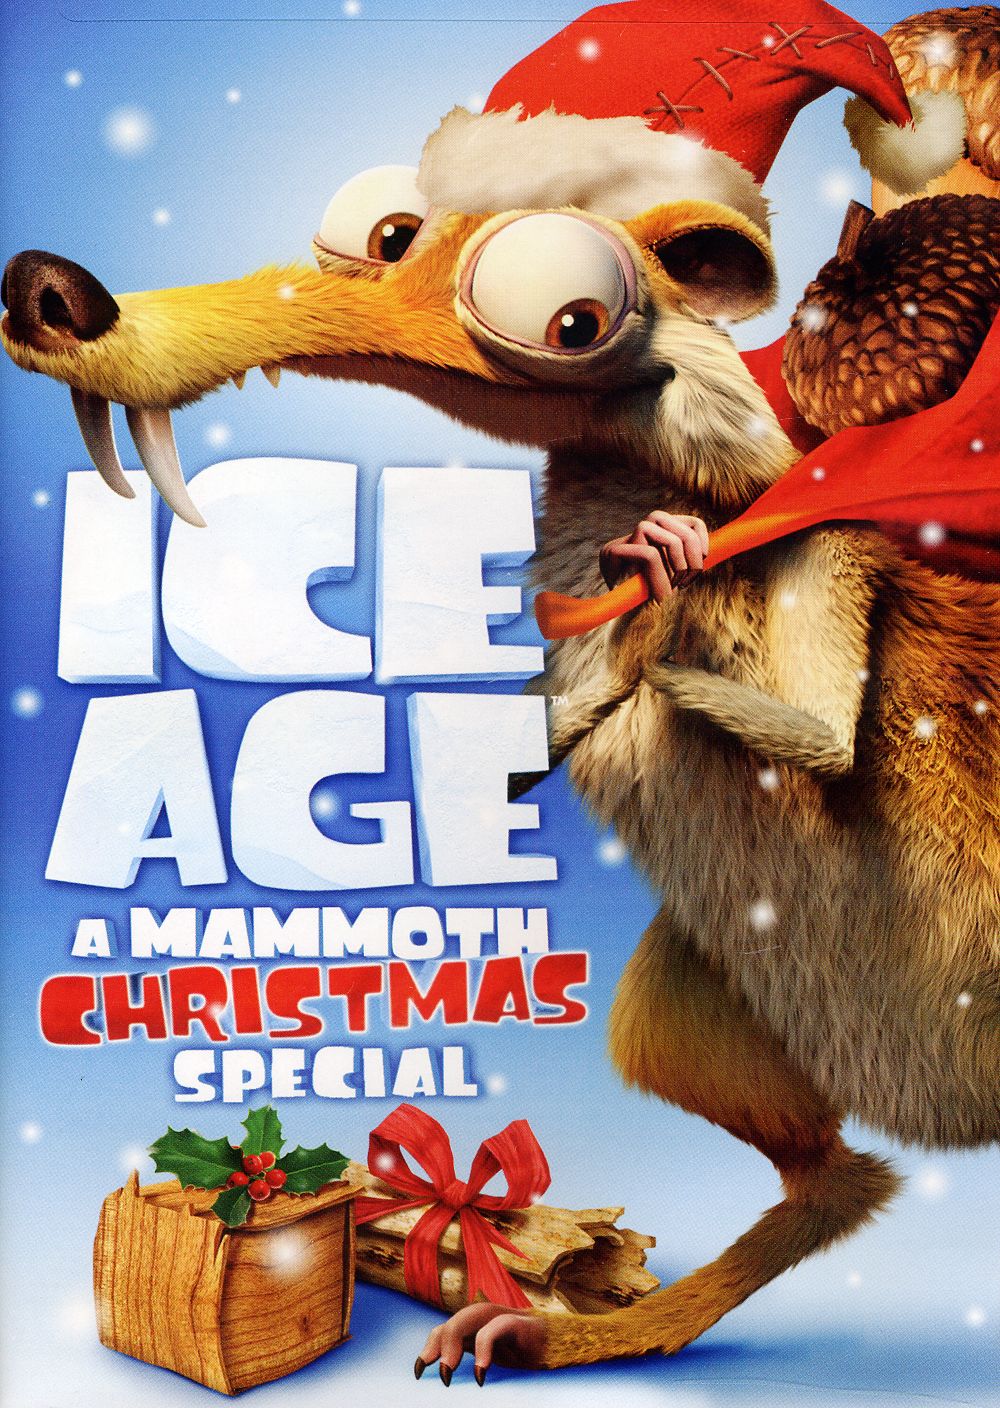 ICE AGE: A MAMMOTH CHRISTMAS SPECIAL / (DOL DUB)